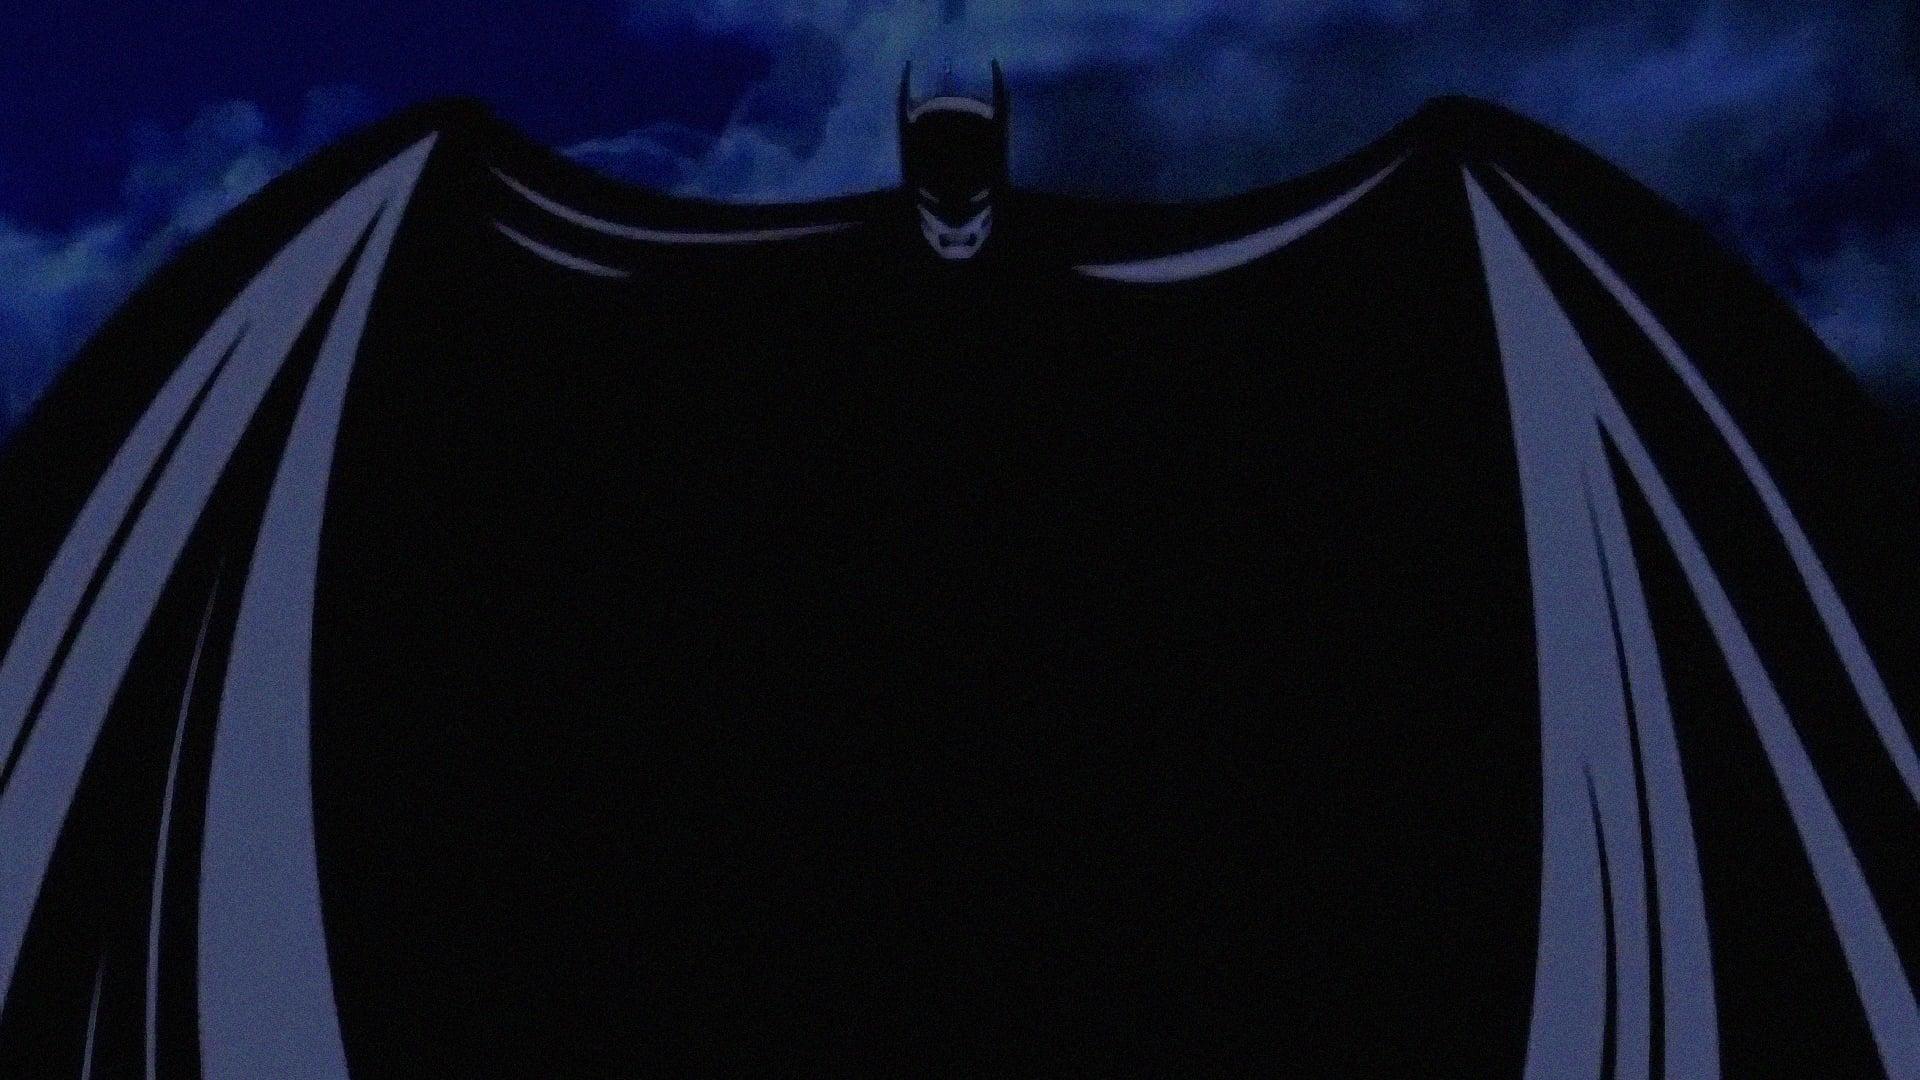 Legends of the Dark Knight: The History of Batman backdrop